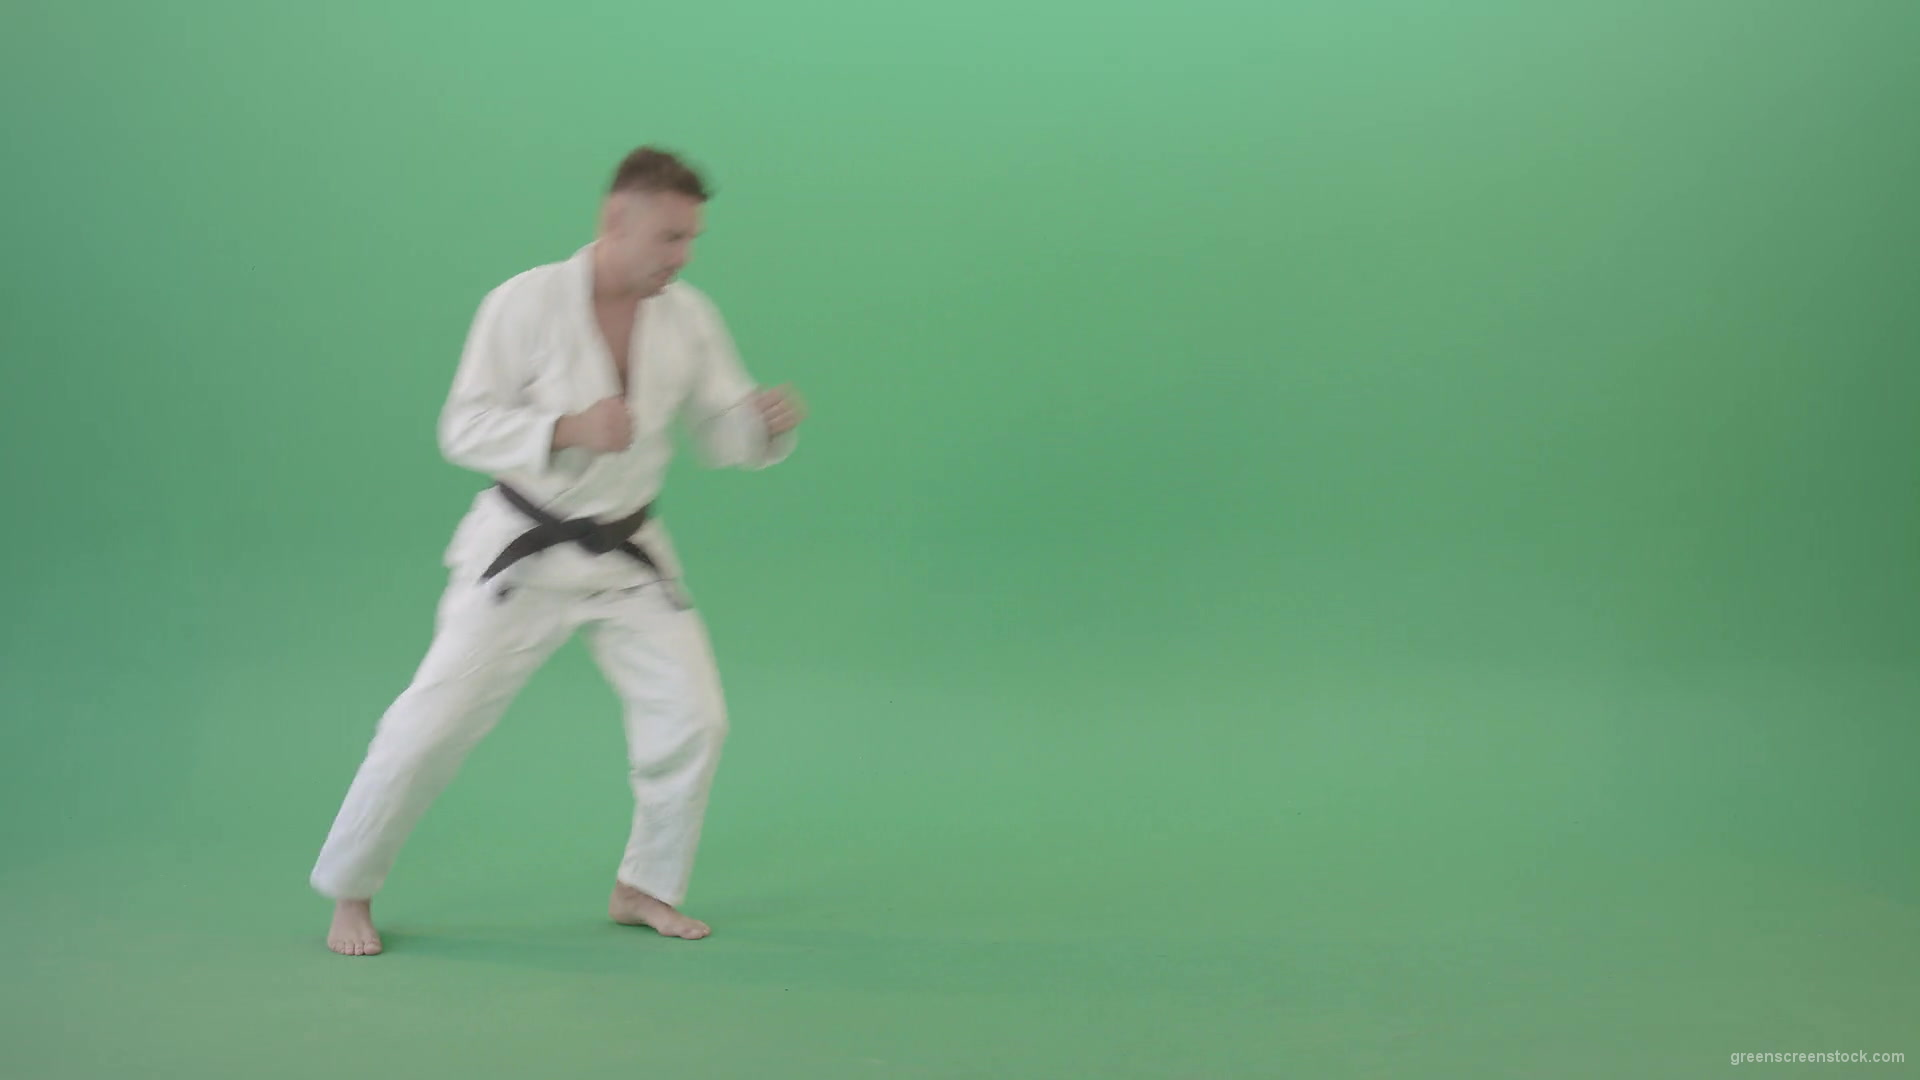 Jujutsu-Sportman-training-isolated-on-green-screen-4K-Video-Footage-1920_005 Green Screen Stock